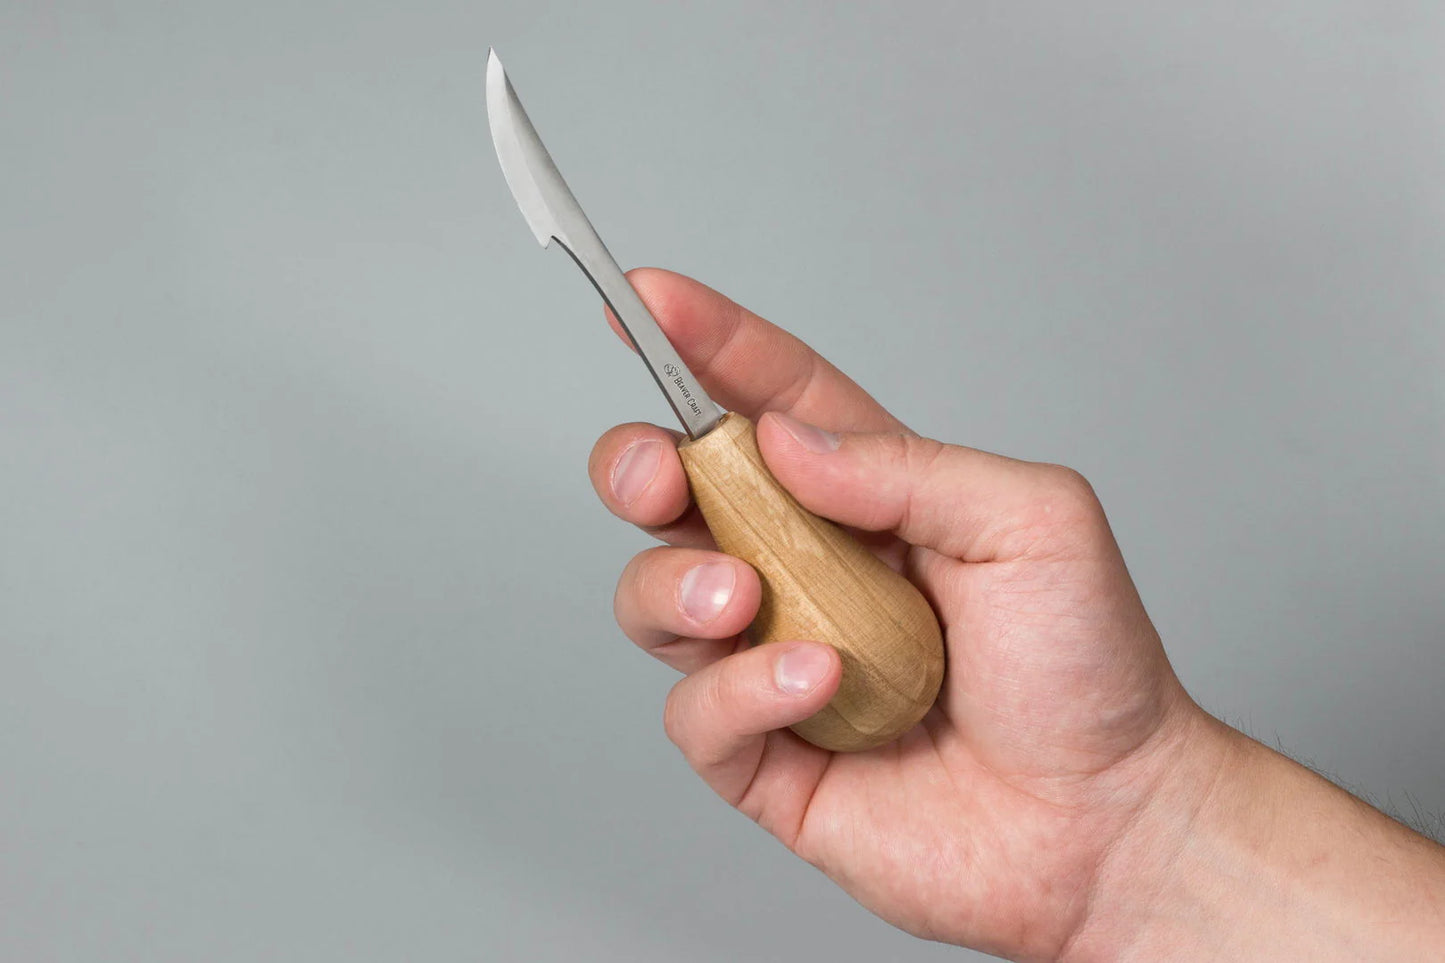 BeaverCraft C17P Universal Wood Working Detail Pro Knife Palm Handle